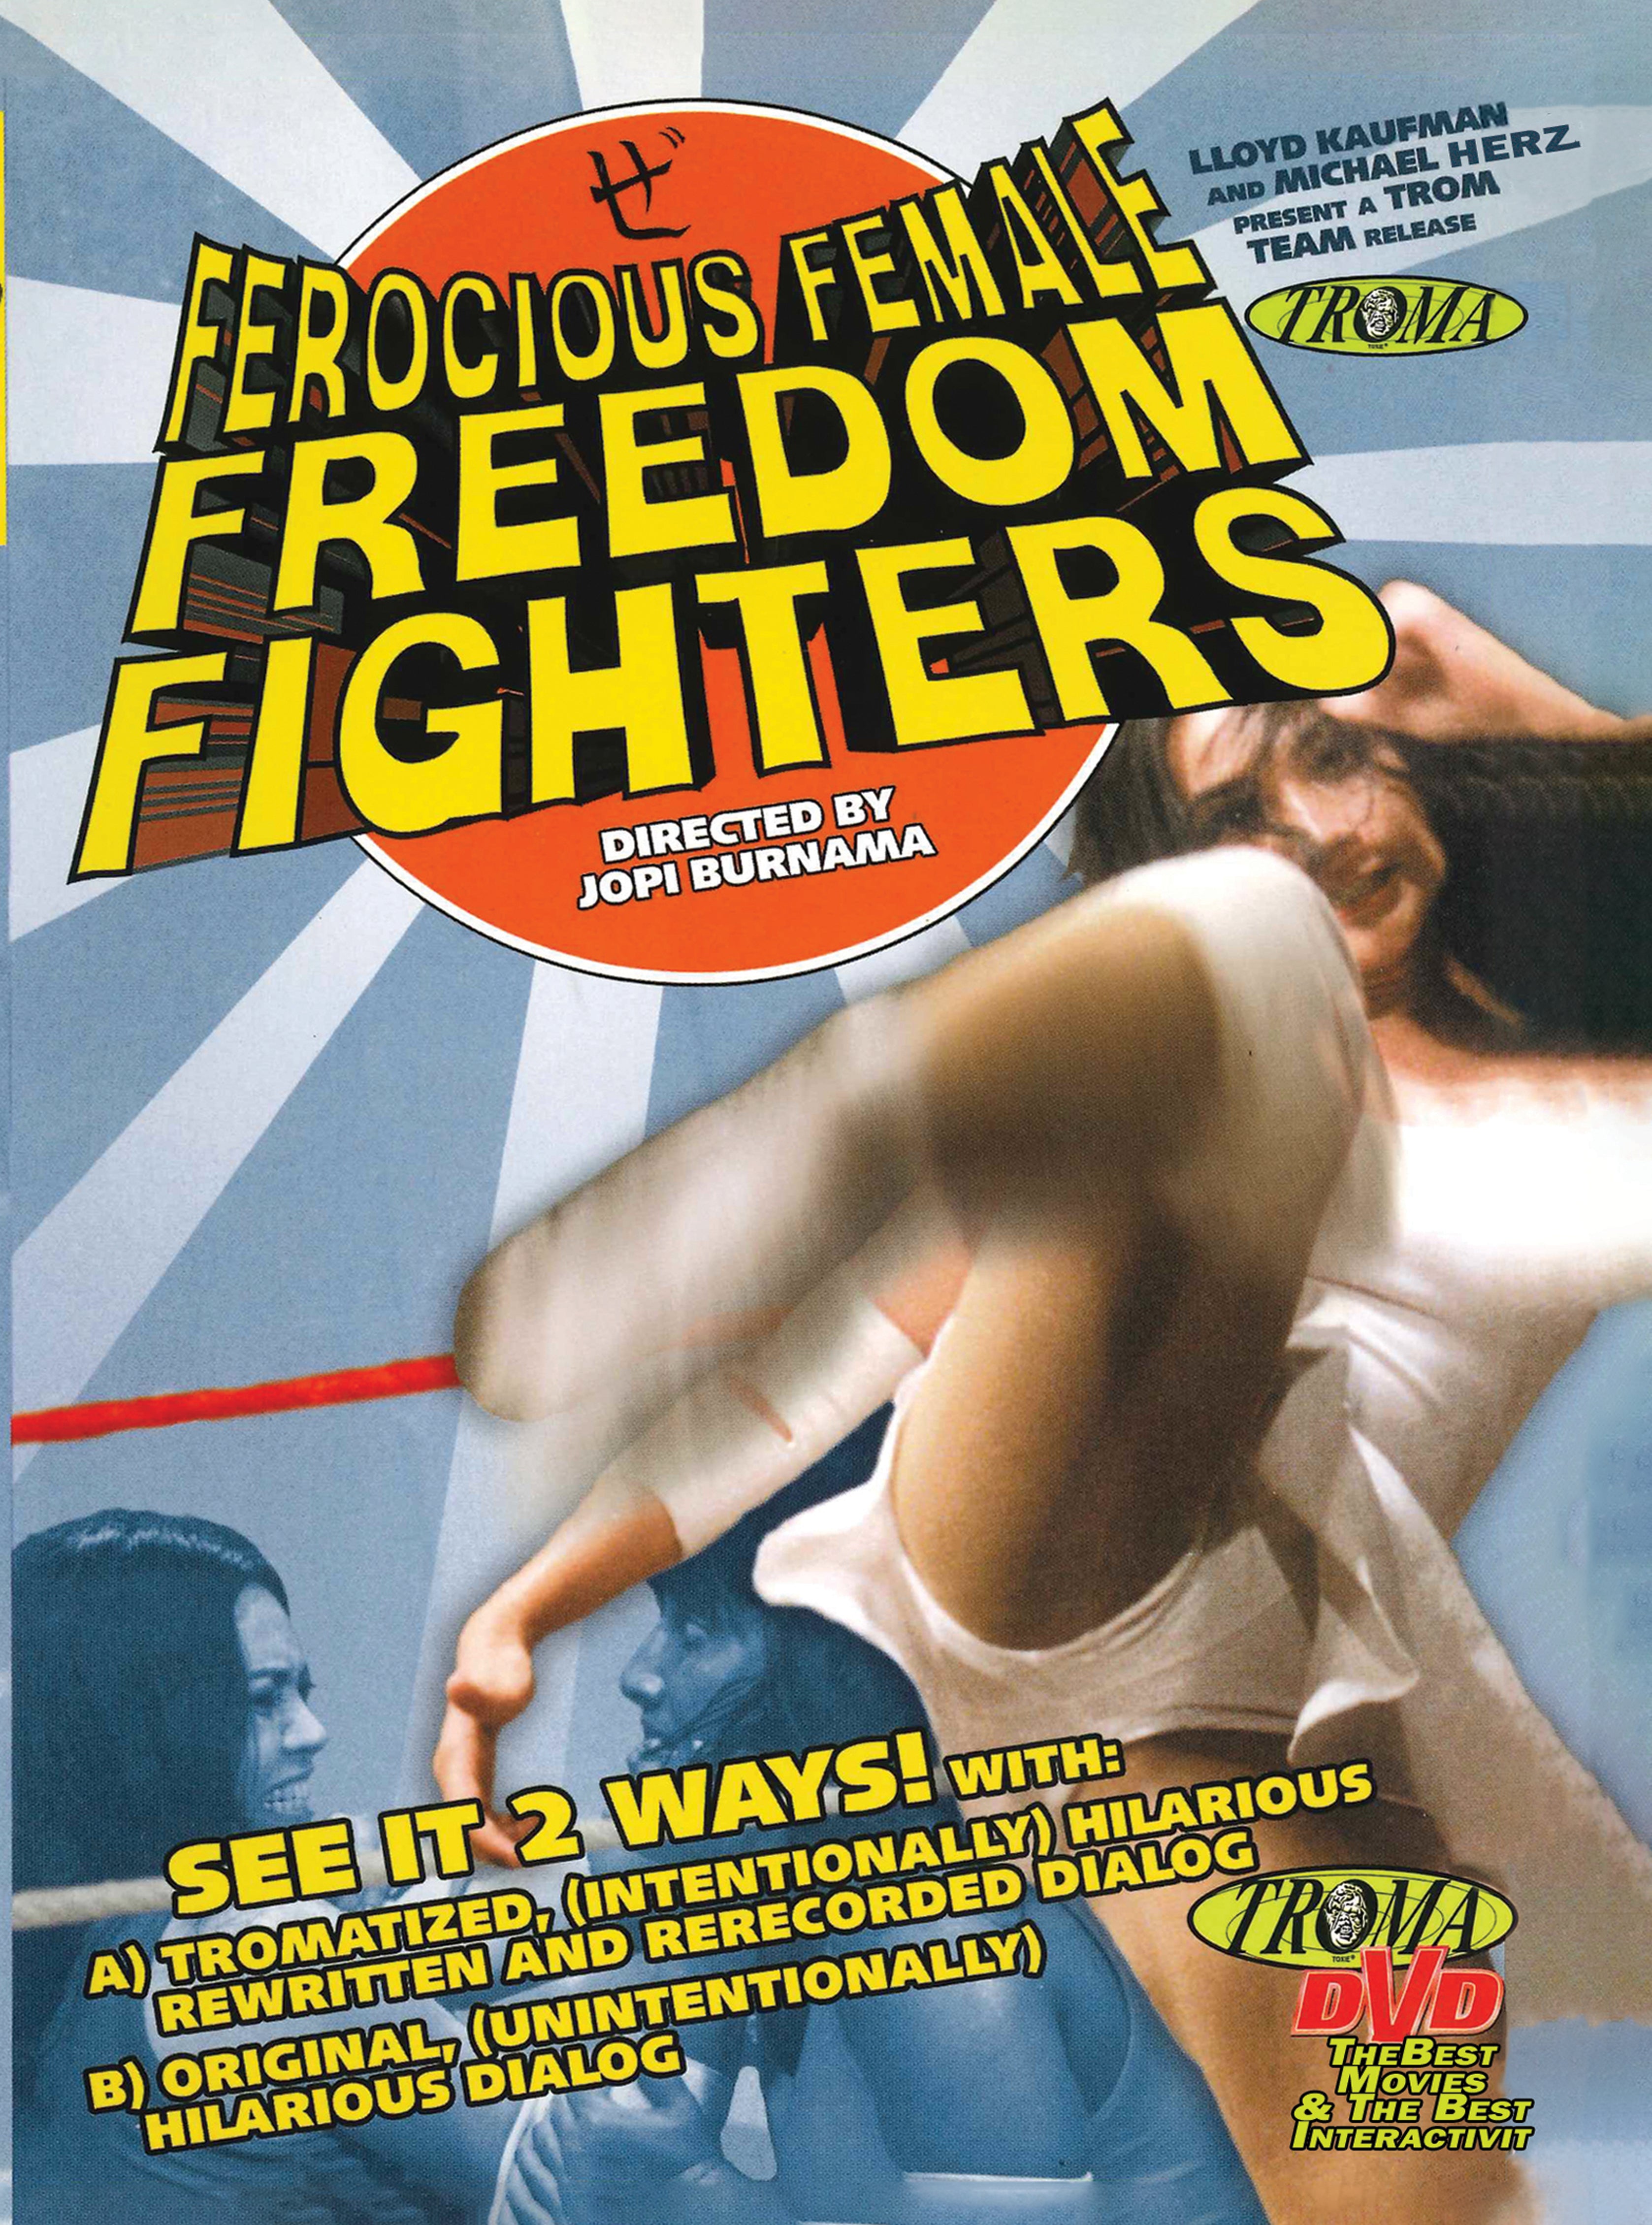 FEROCIOUS FEMALE FREEDOM FIGHTERS DVD